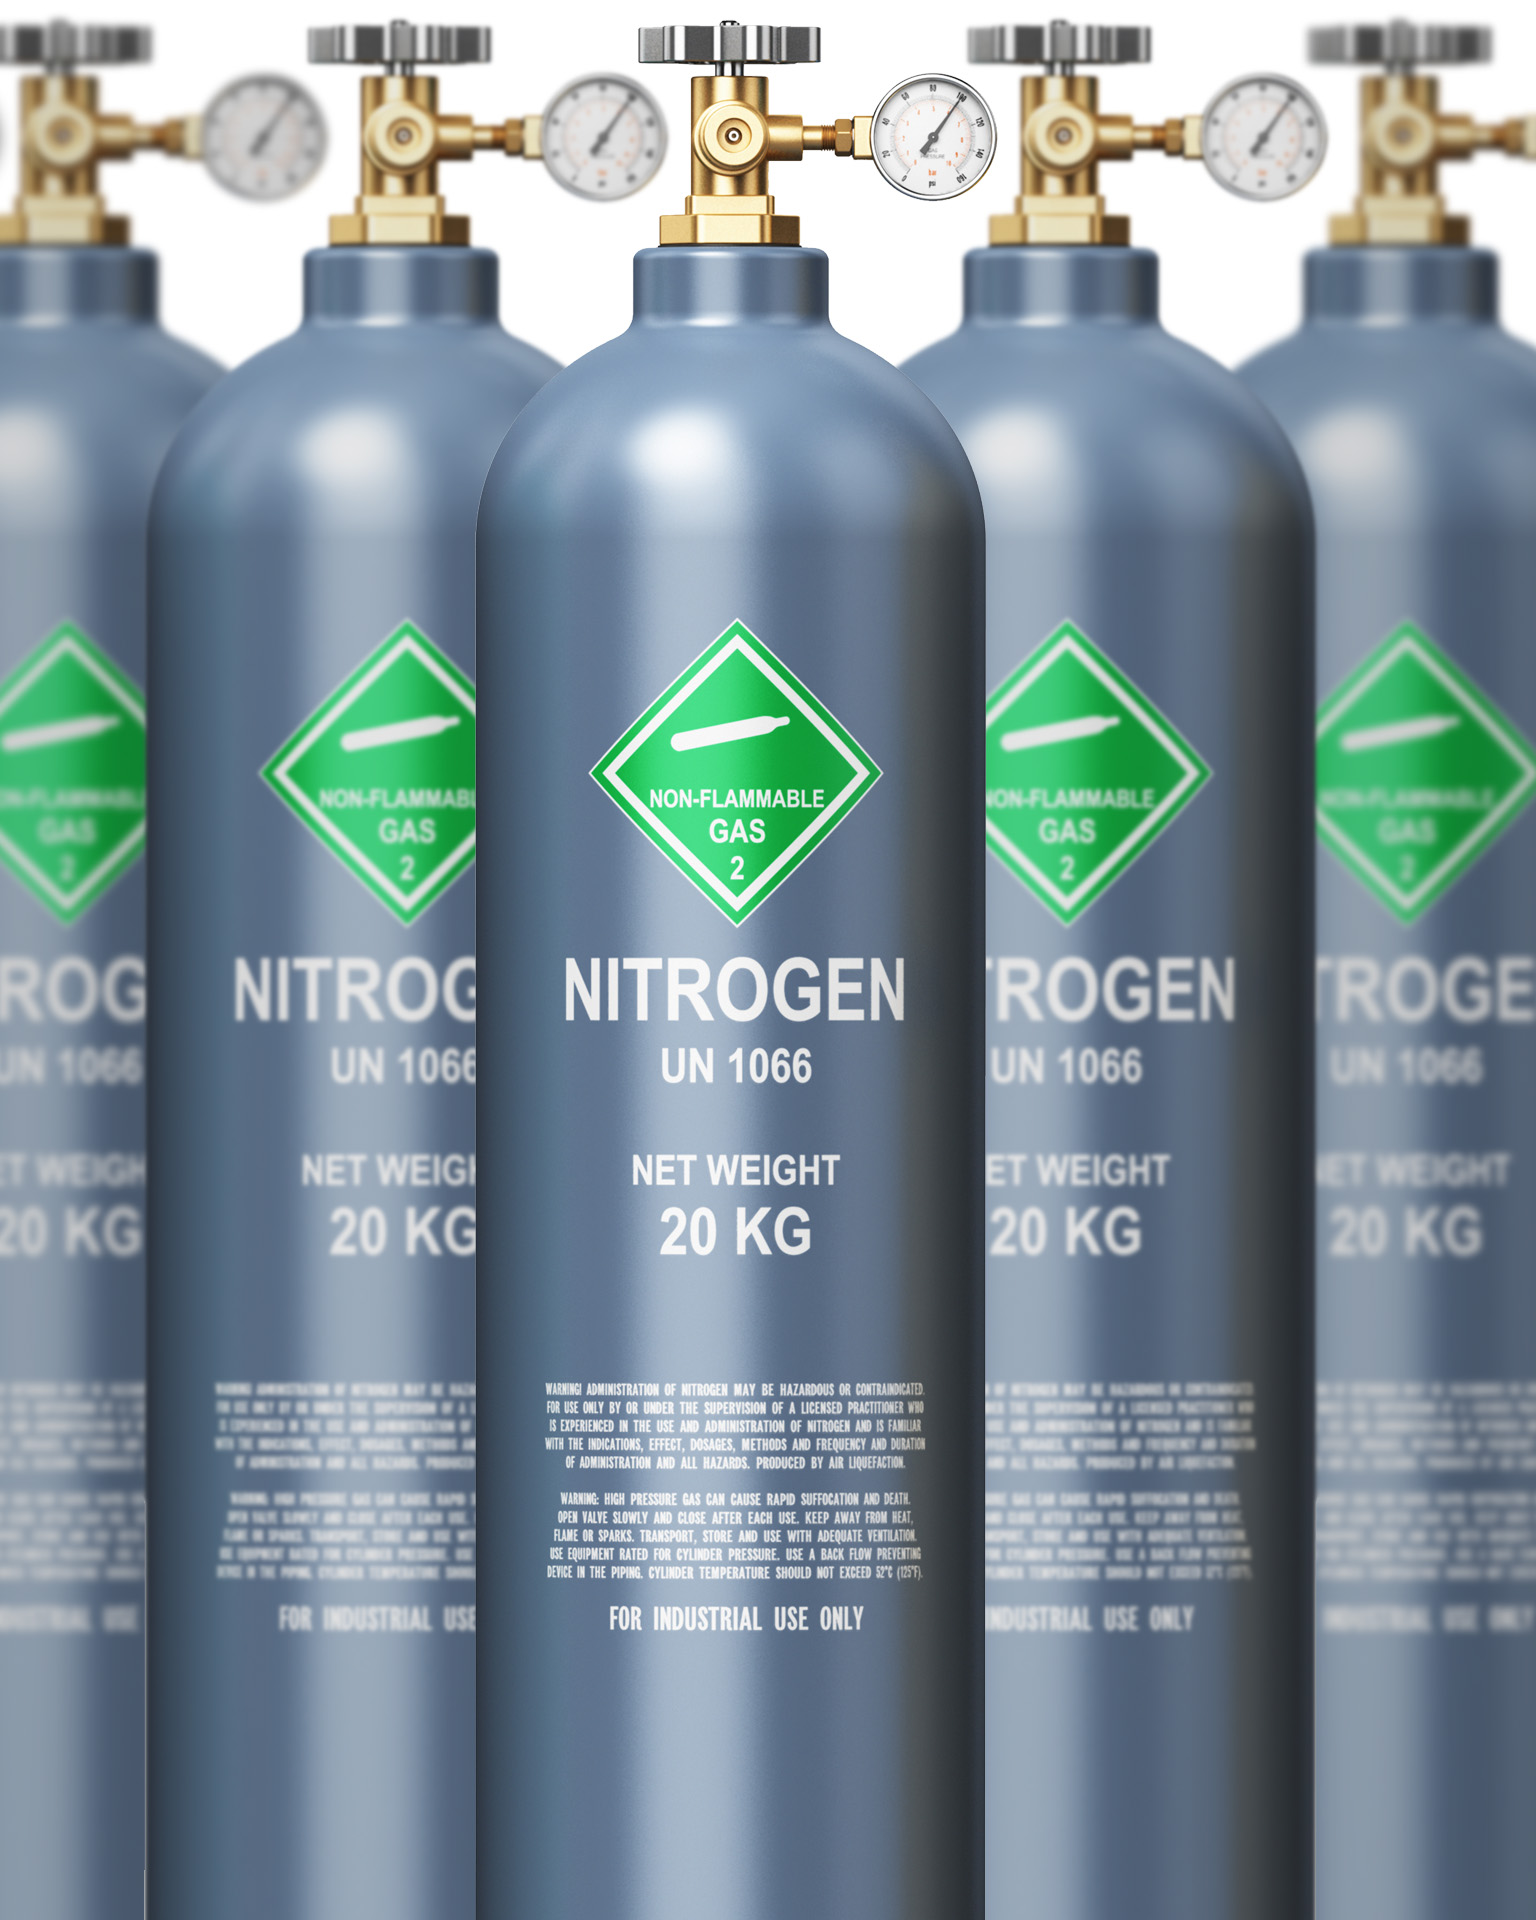 IMG - Web - Buy Nitrogen